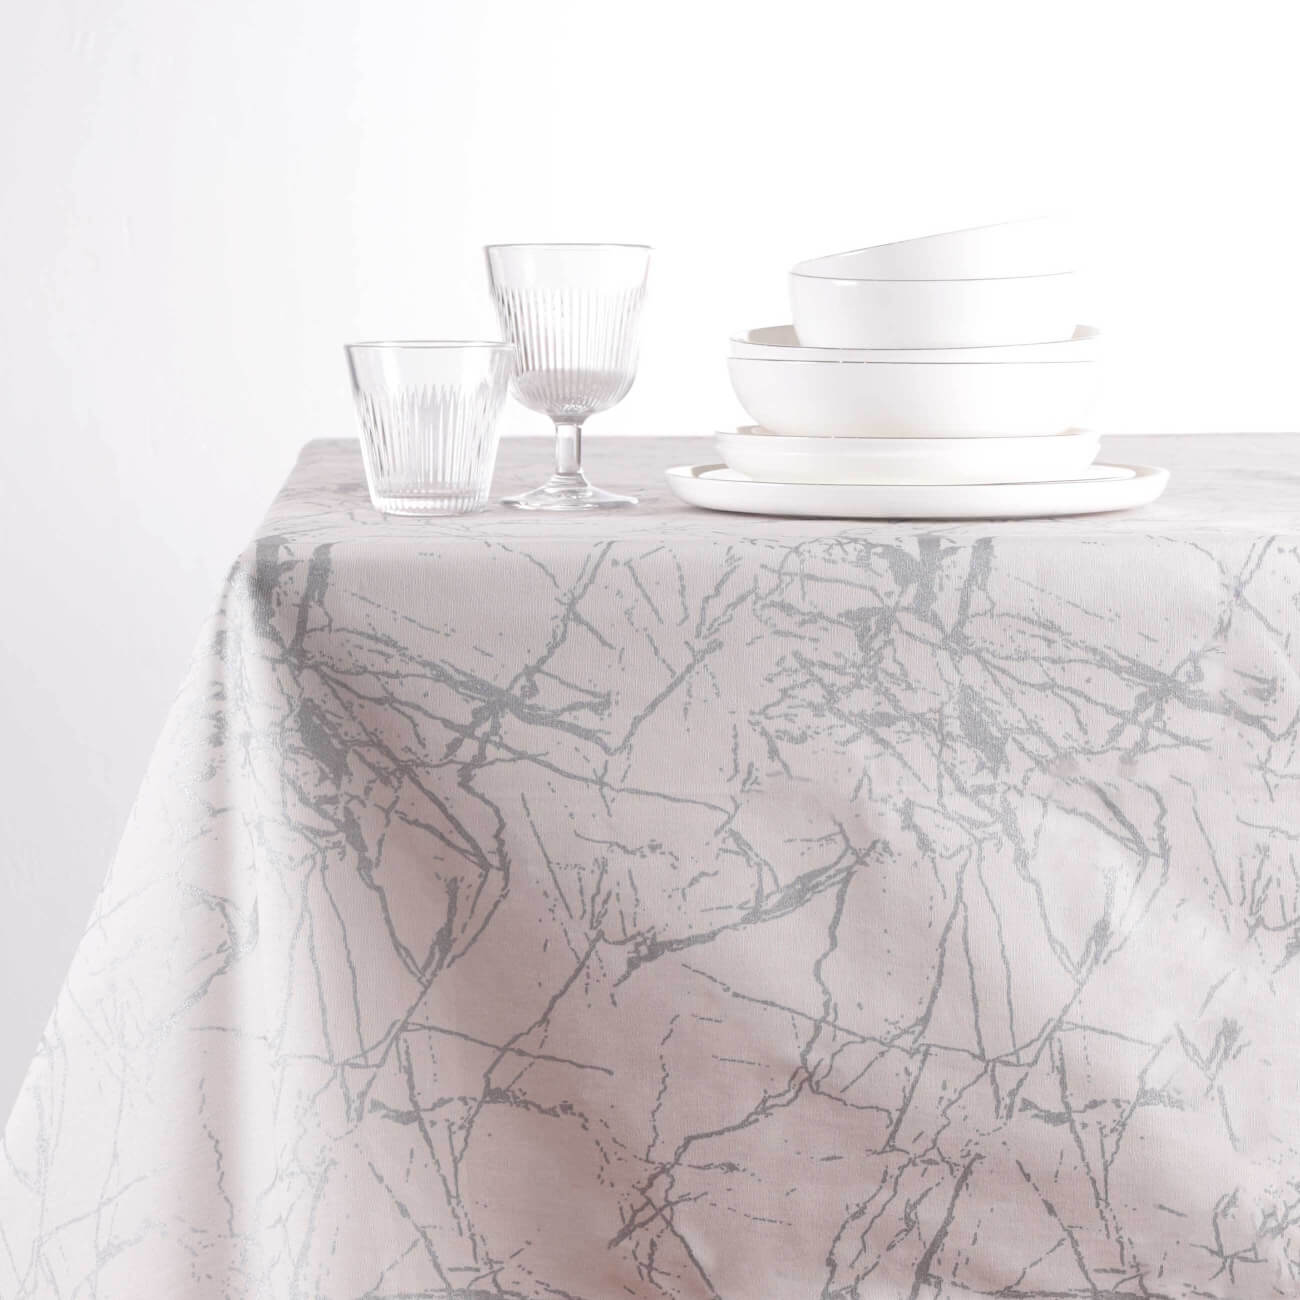 Tablecloth, 160x160 cm, cotton / acrylic, silver-gray, Marble foil изображение № 1